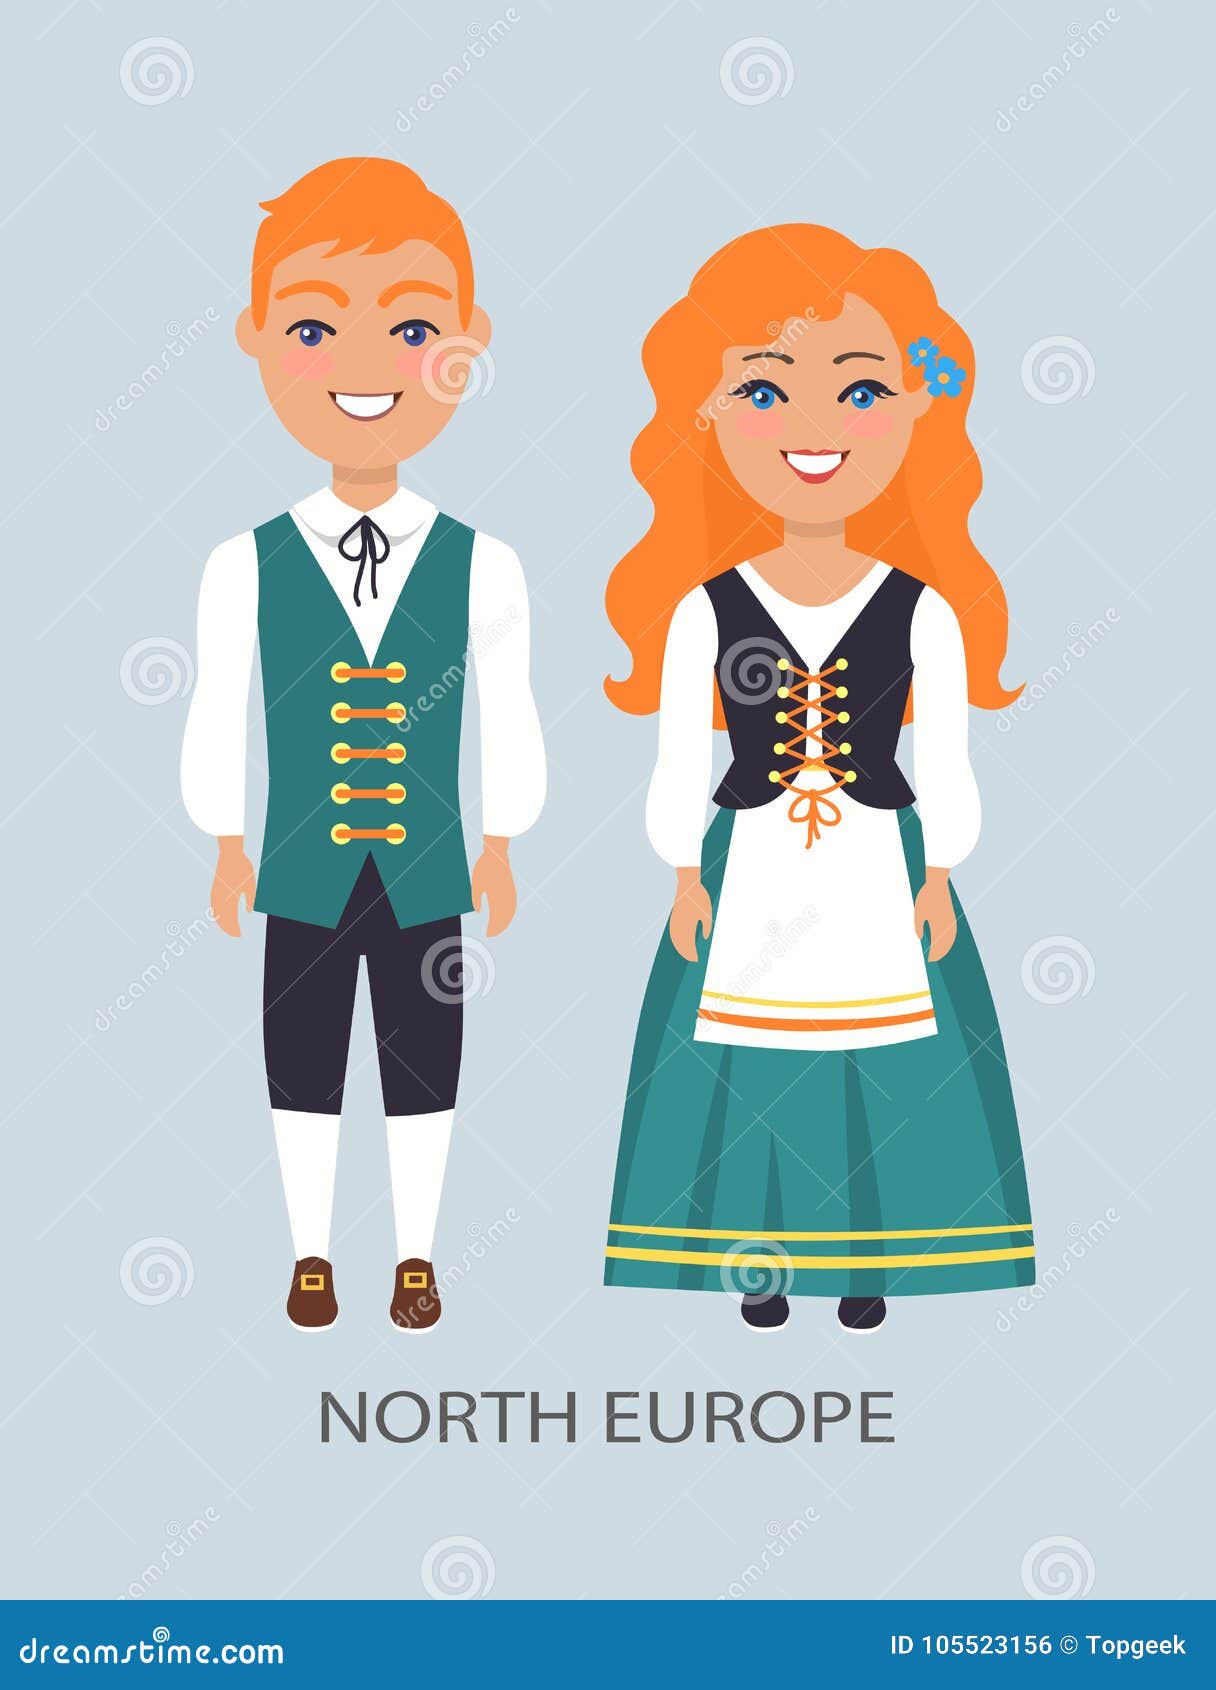 North Europe People, Customs Vector Illustration Stock Vector ...